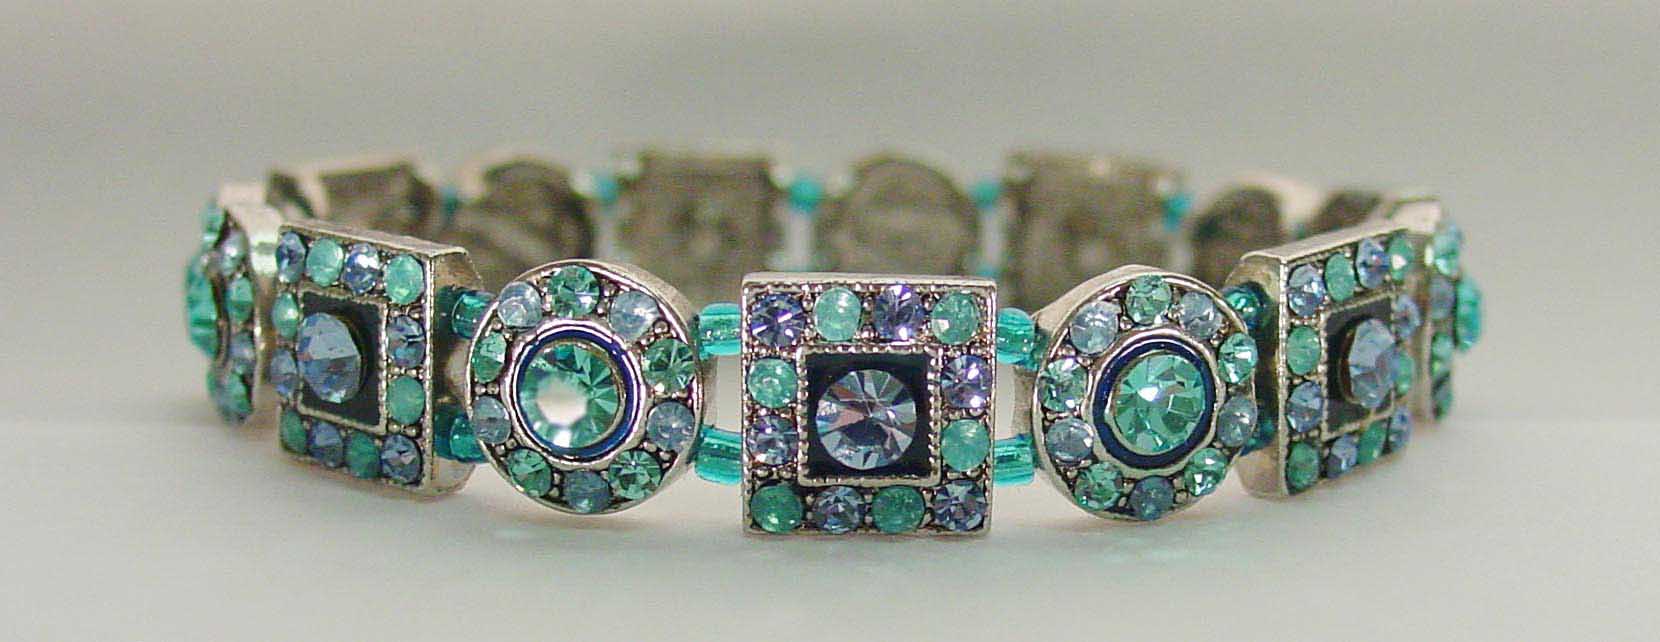 Blue crystal rhodium plated bracelet